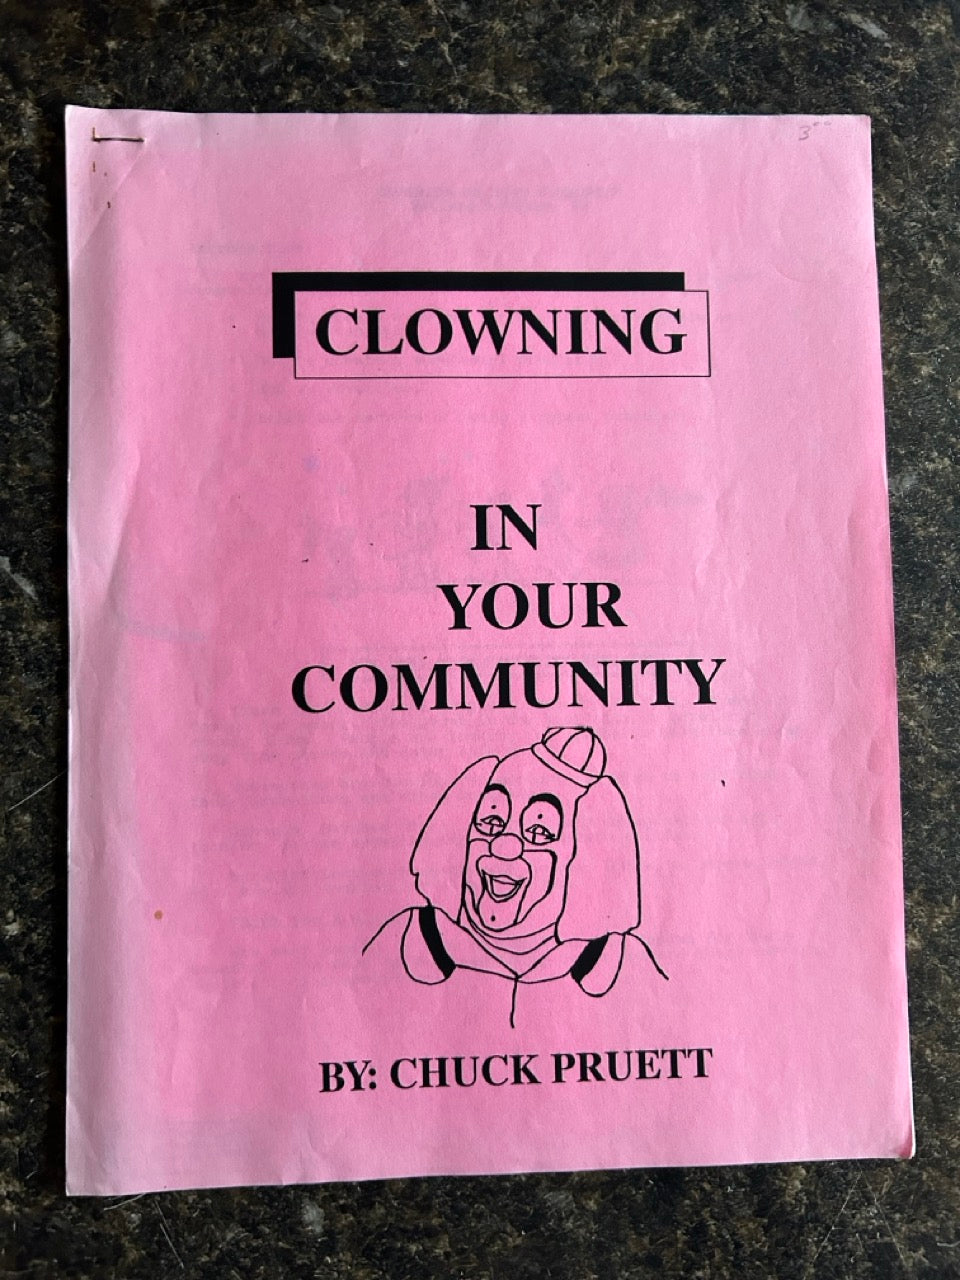 2 Gospel Magic/Clowning Lecture Notes - Bryan Buch & Chuck Pruett